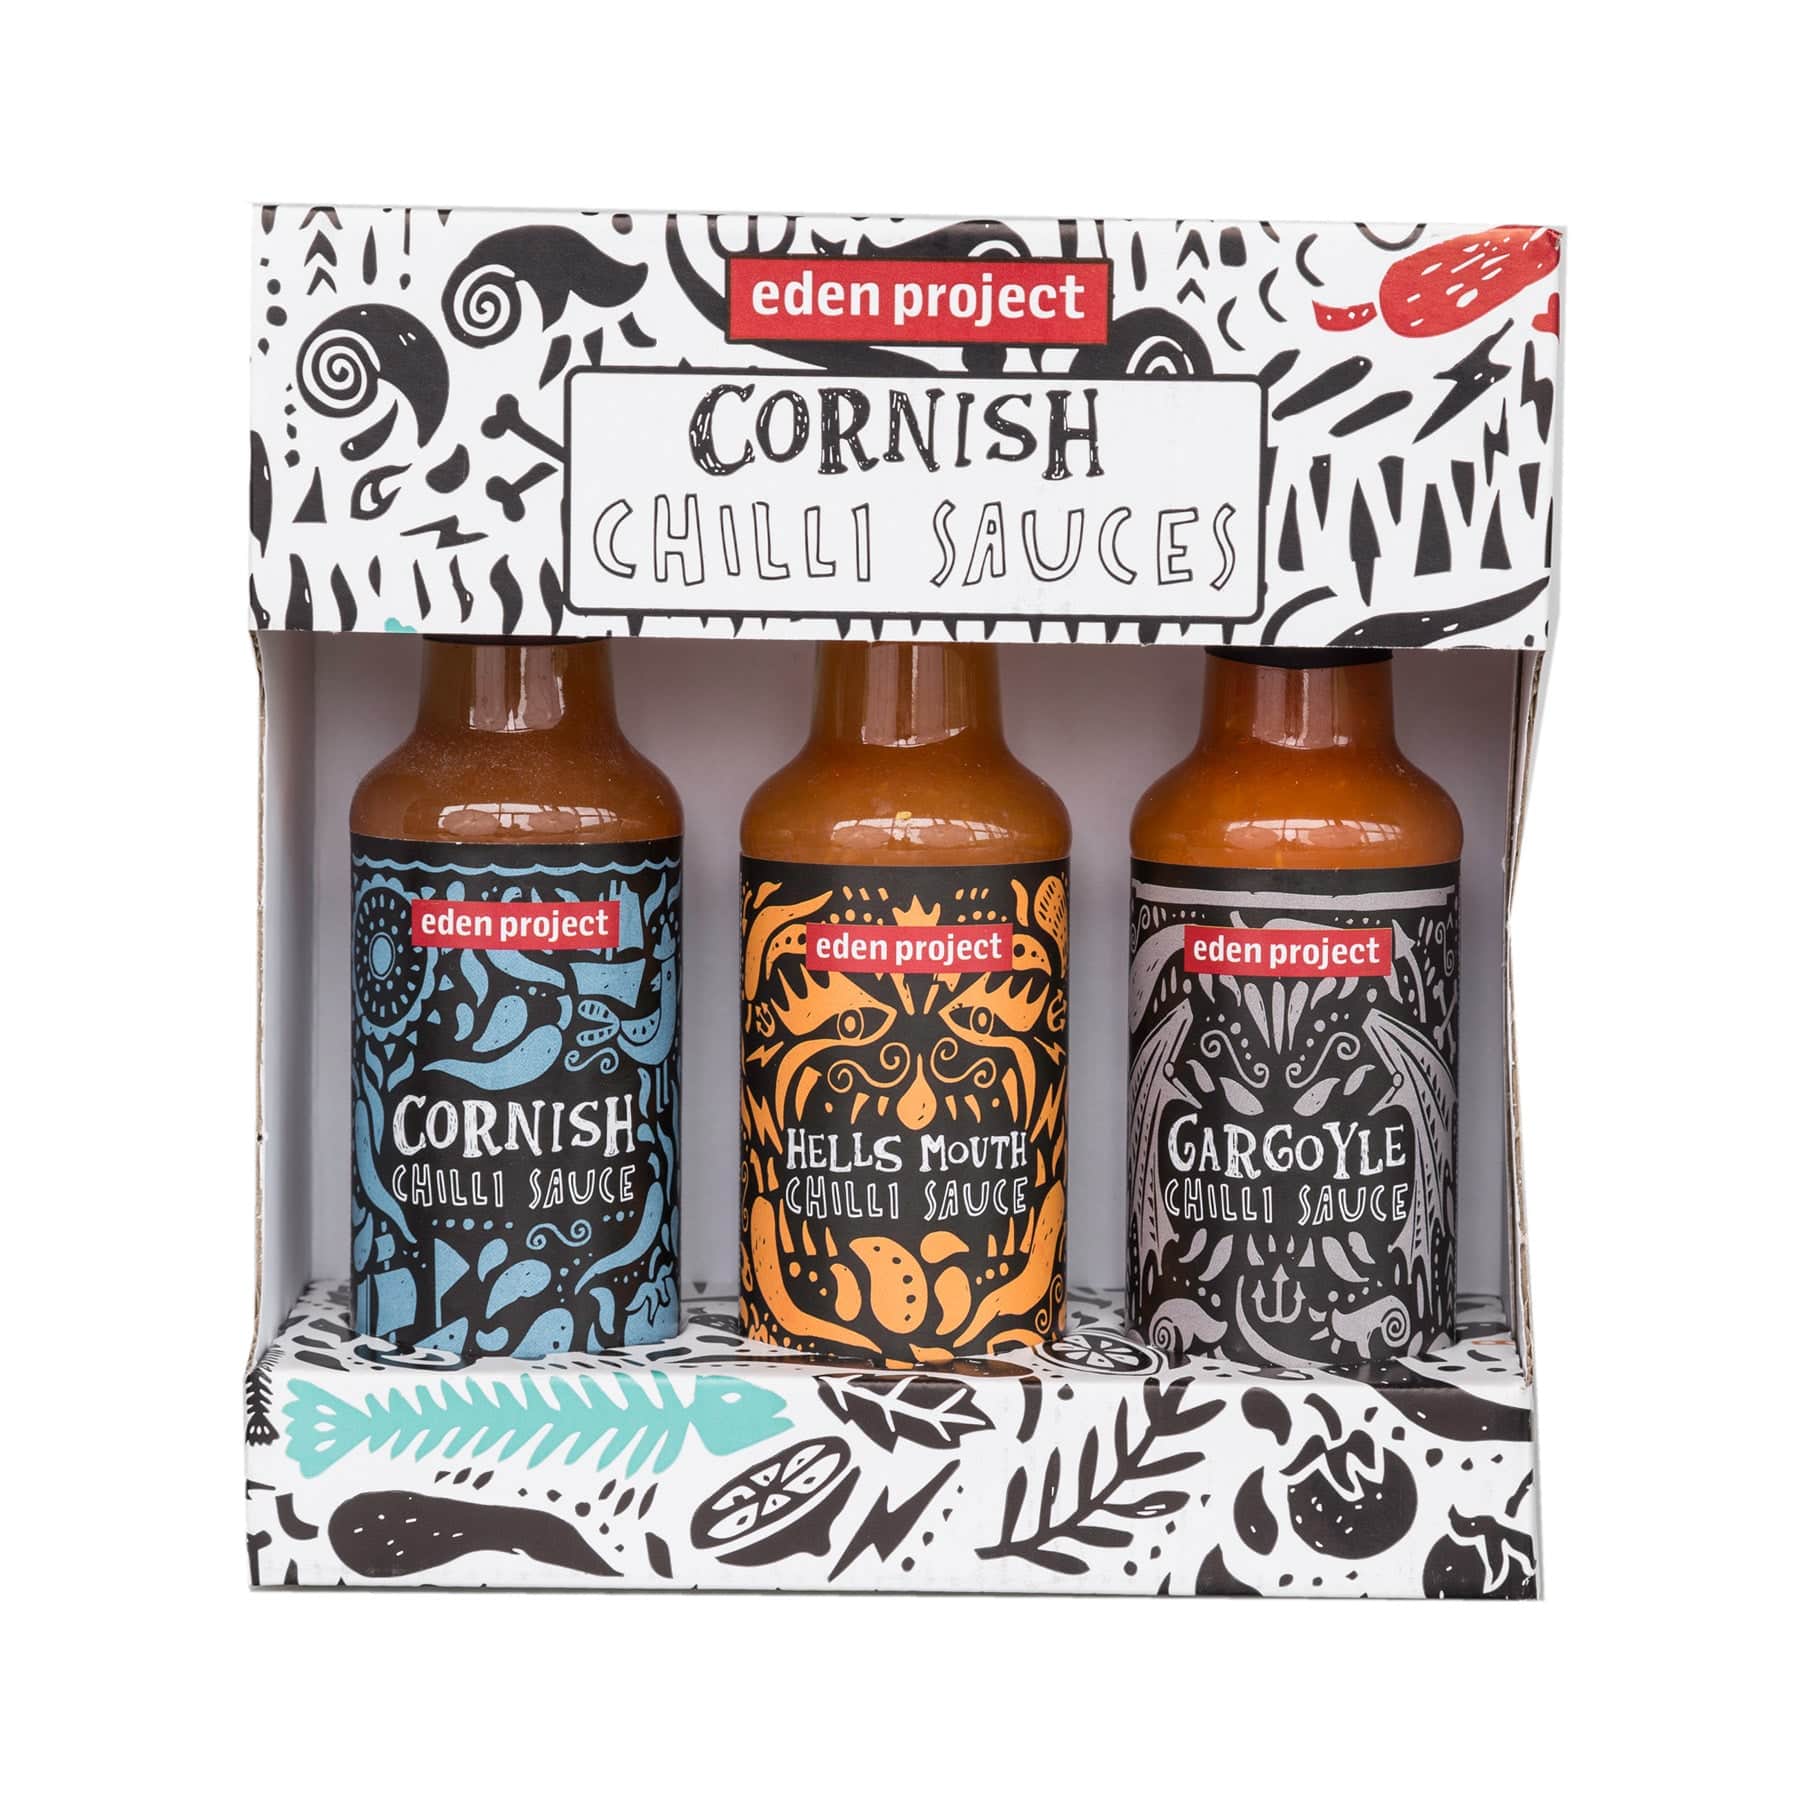 Cornish chilli sauce set - original